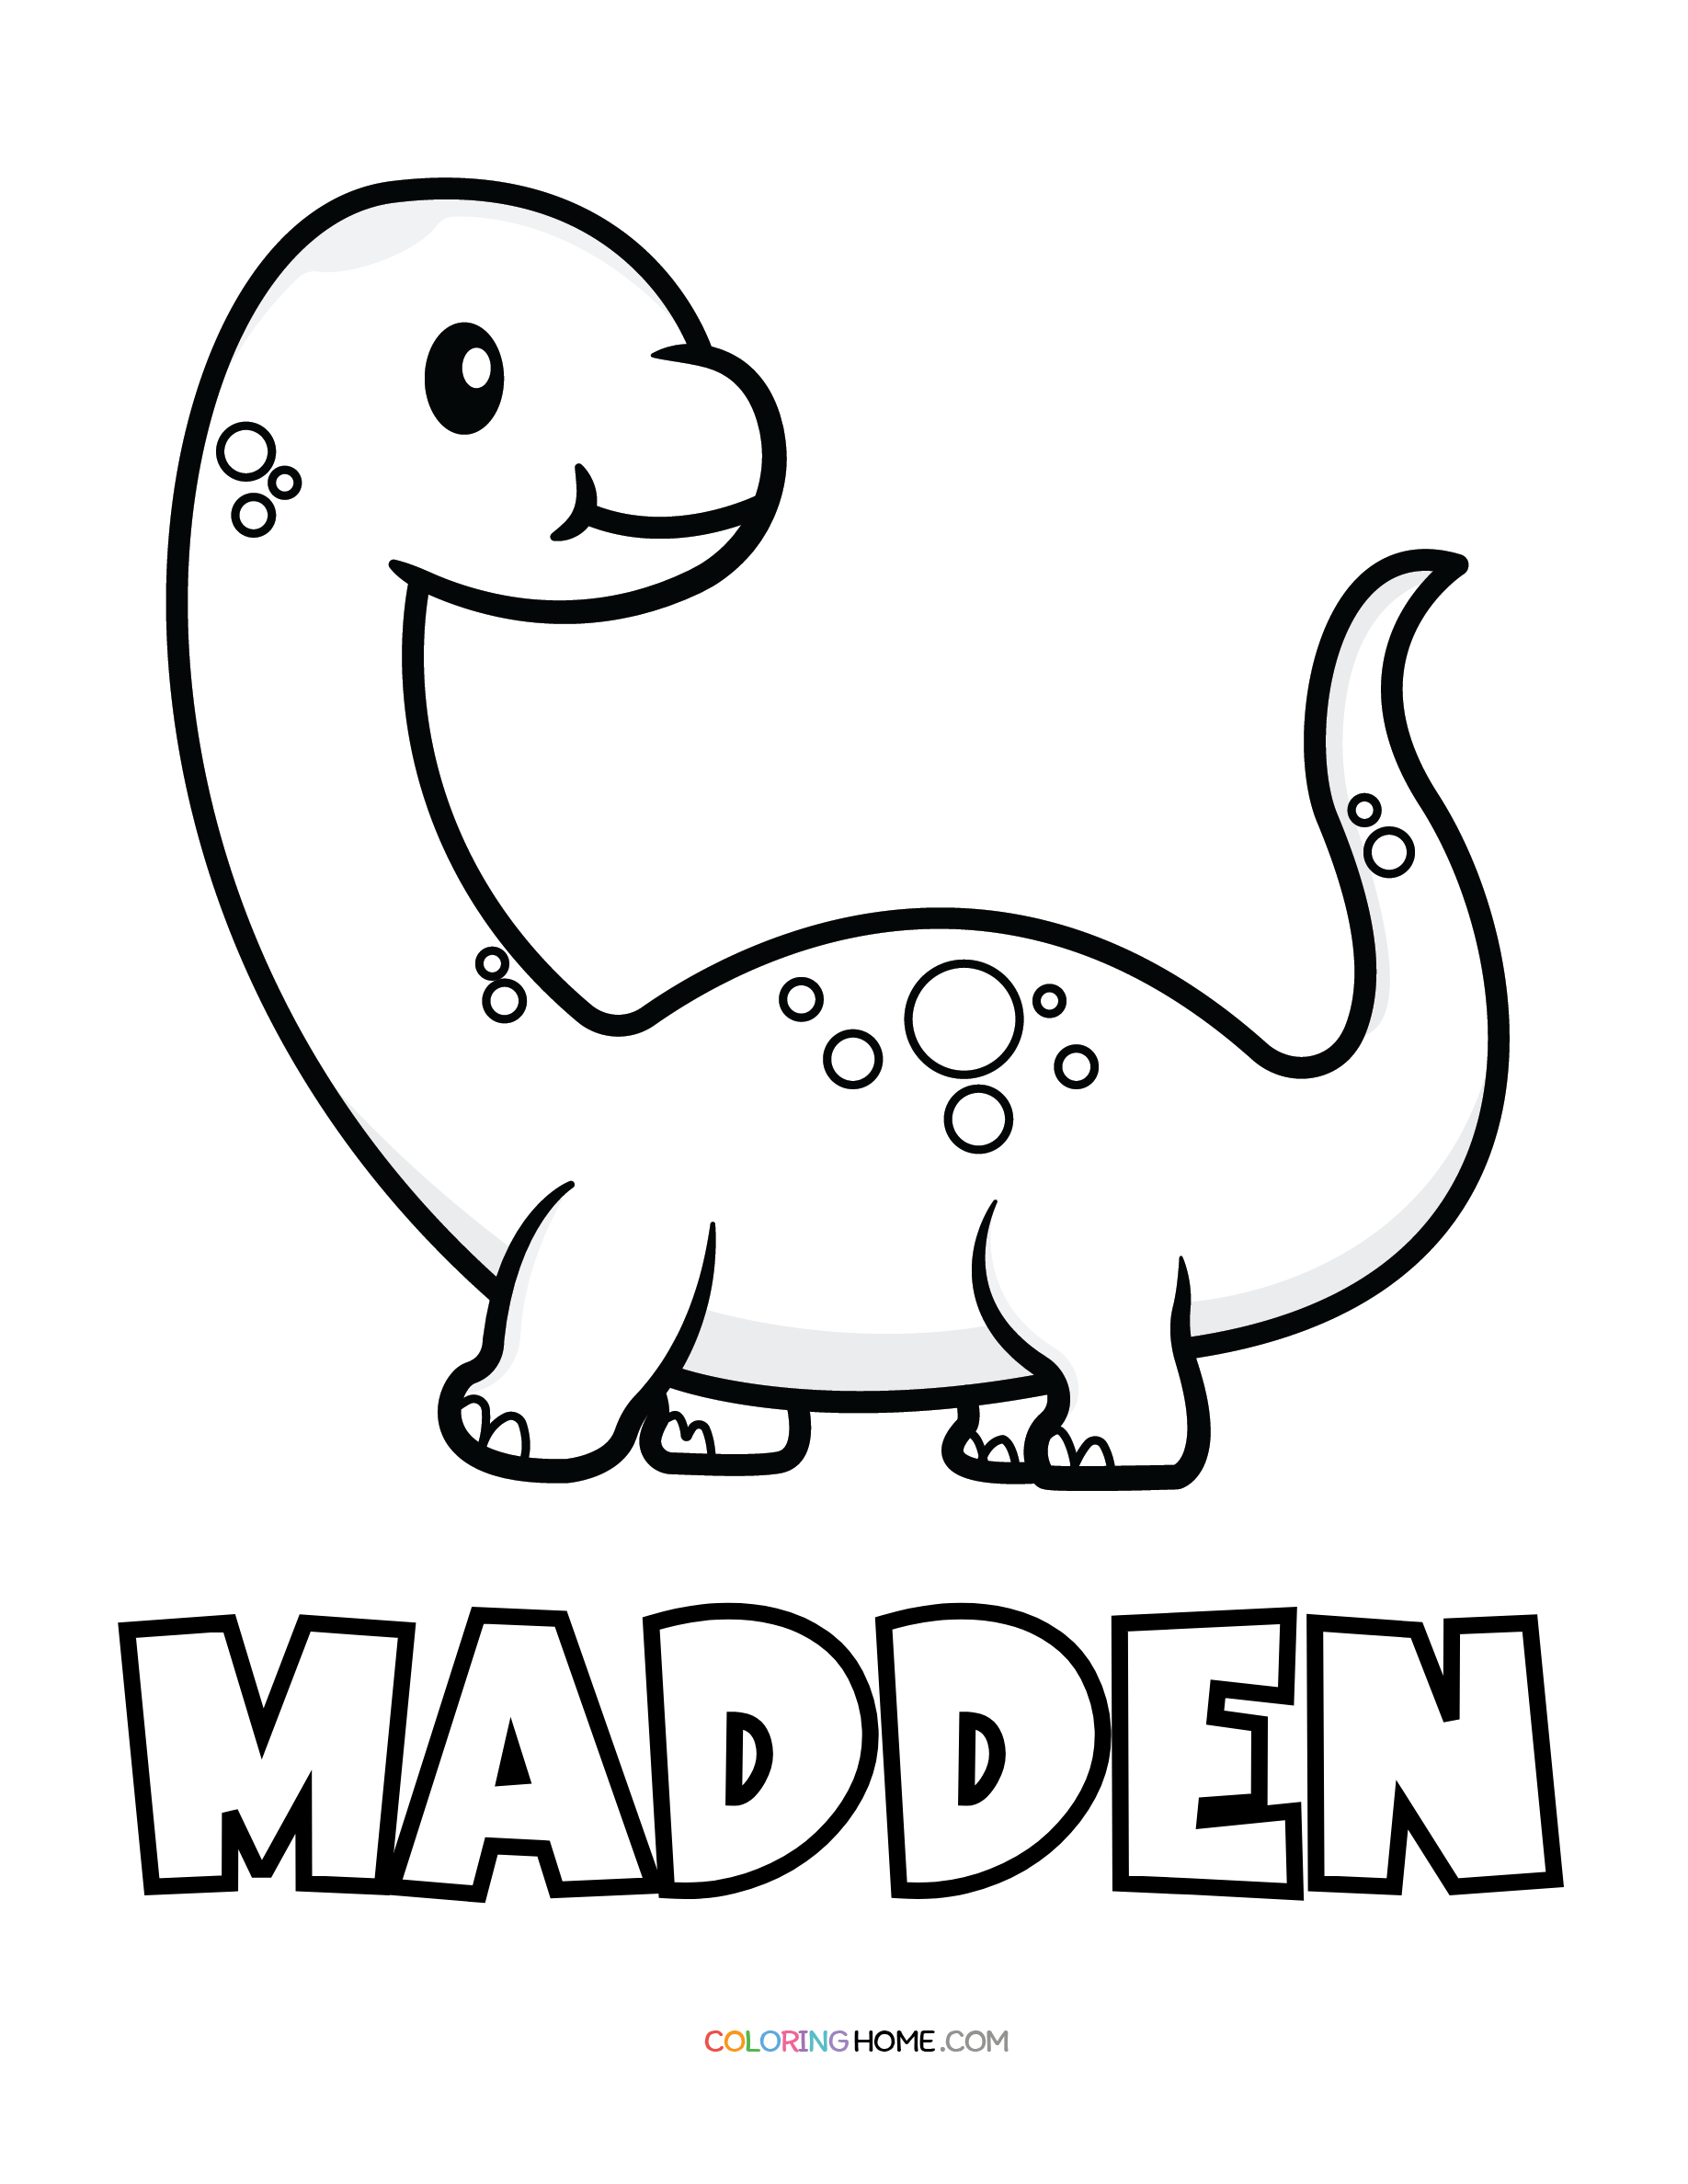 Madden dinosaur coloring page